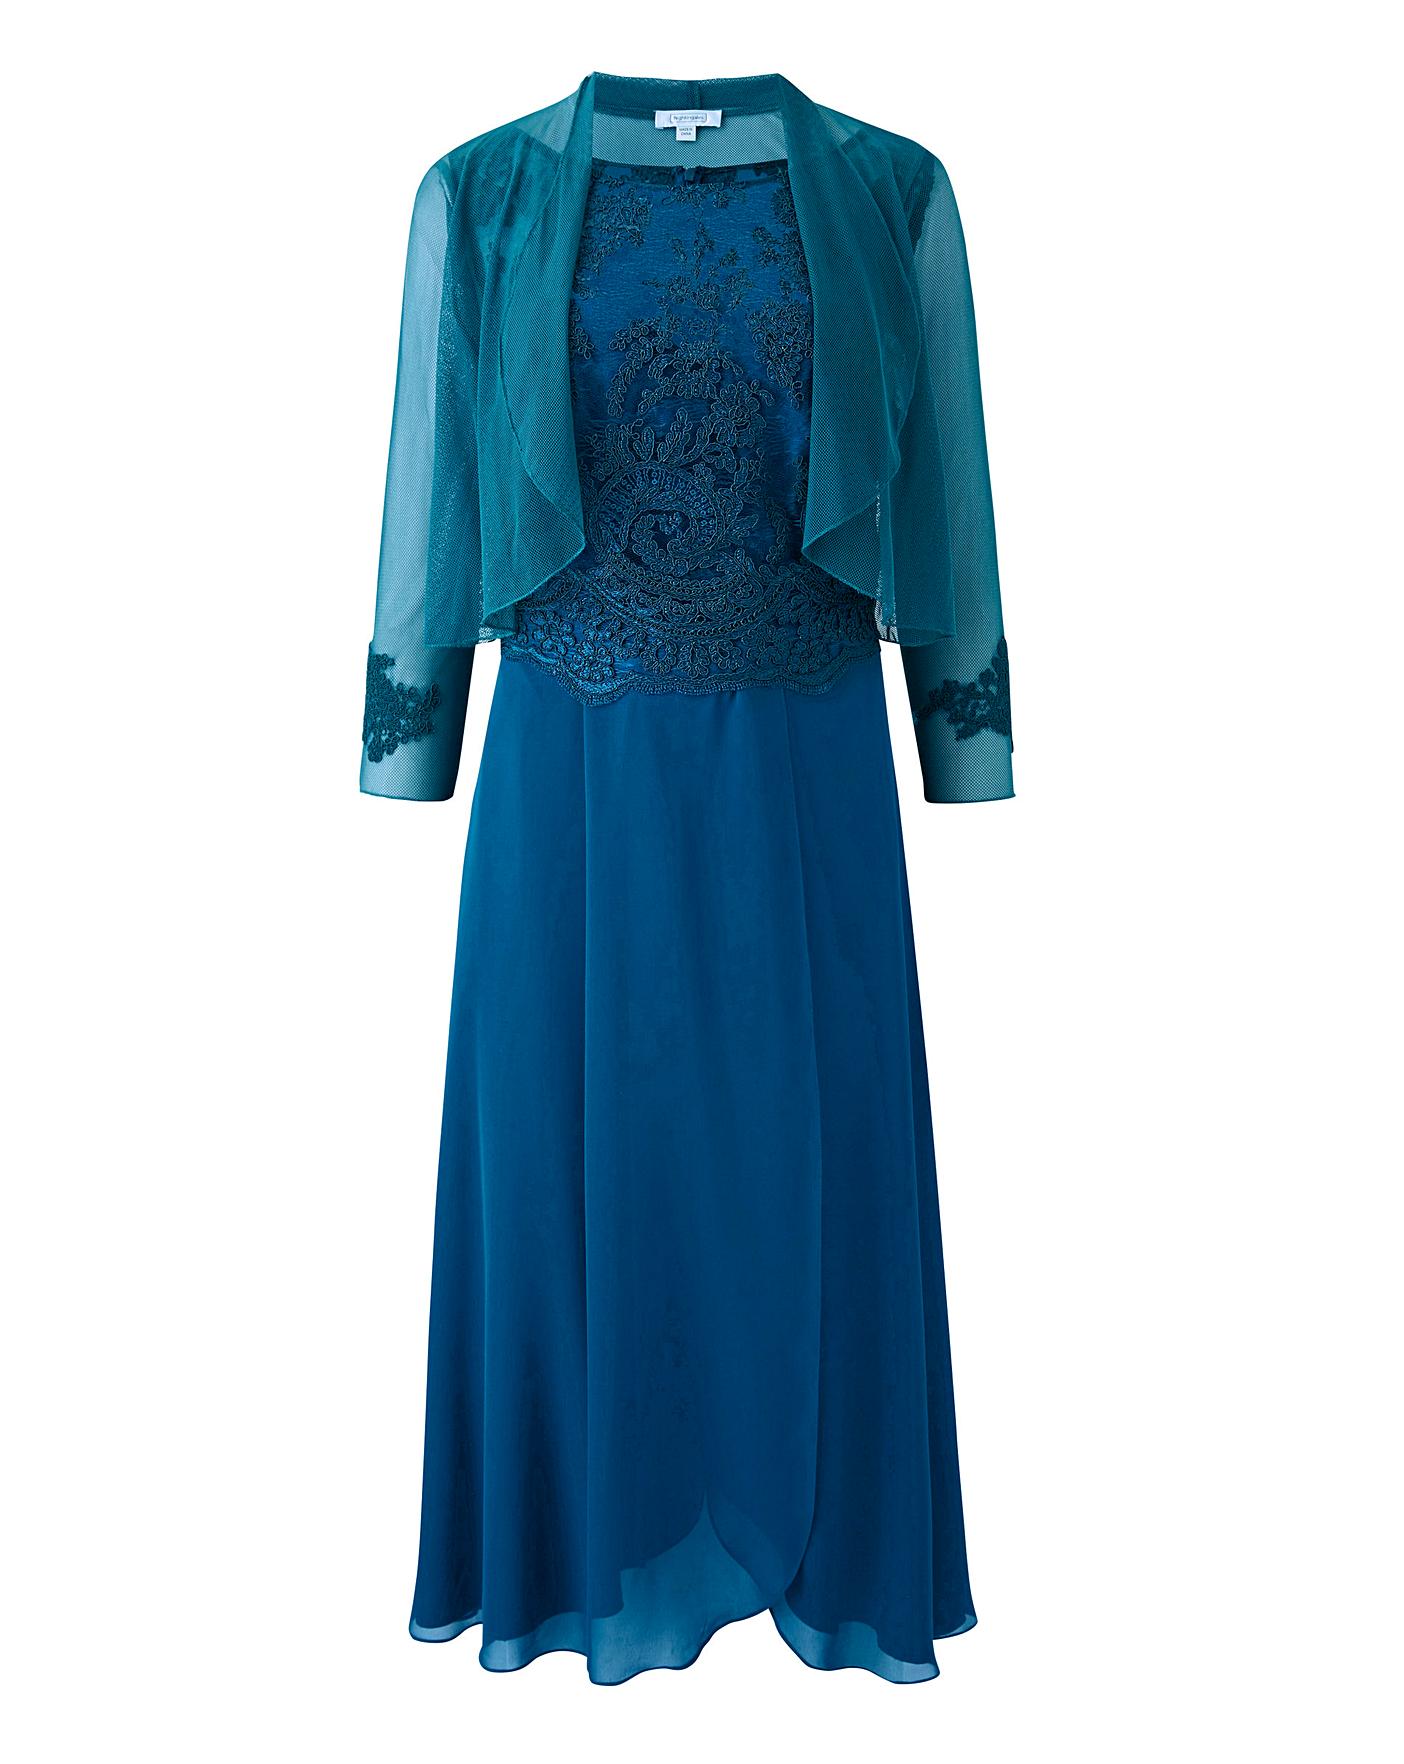 Nightingales Embroidered Dress and Shrug | Marisota